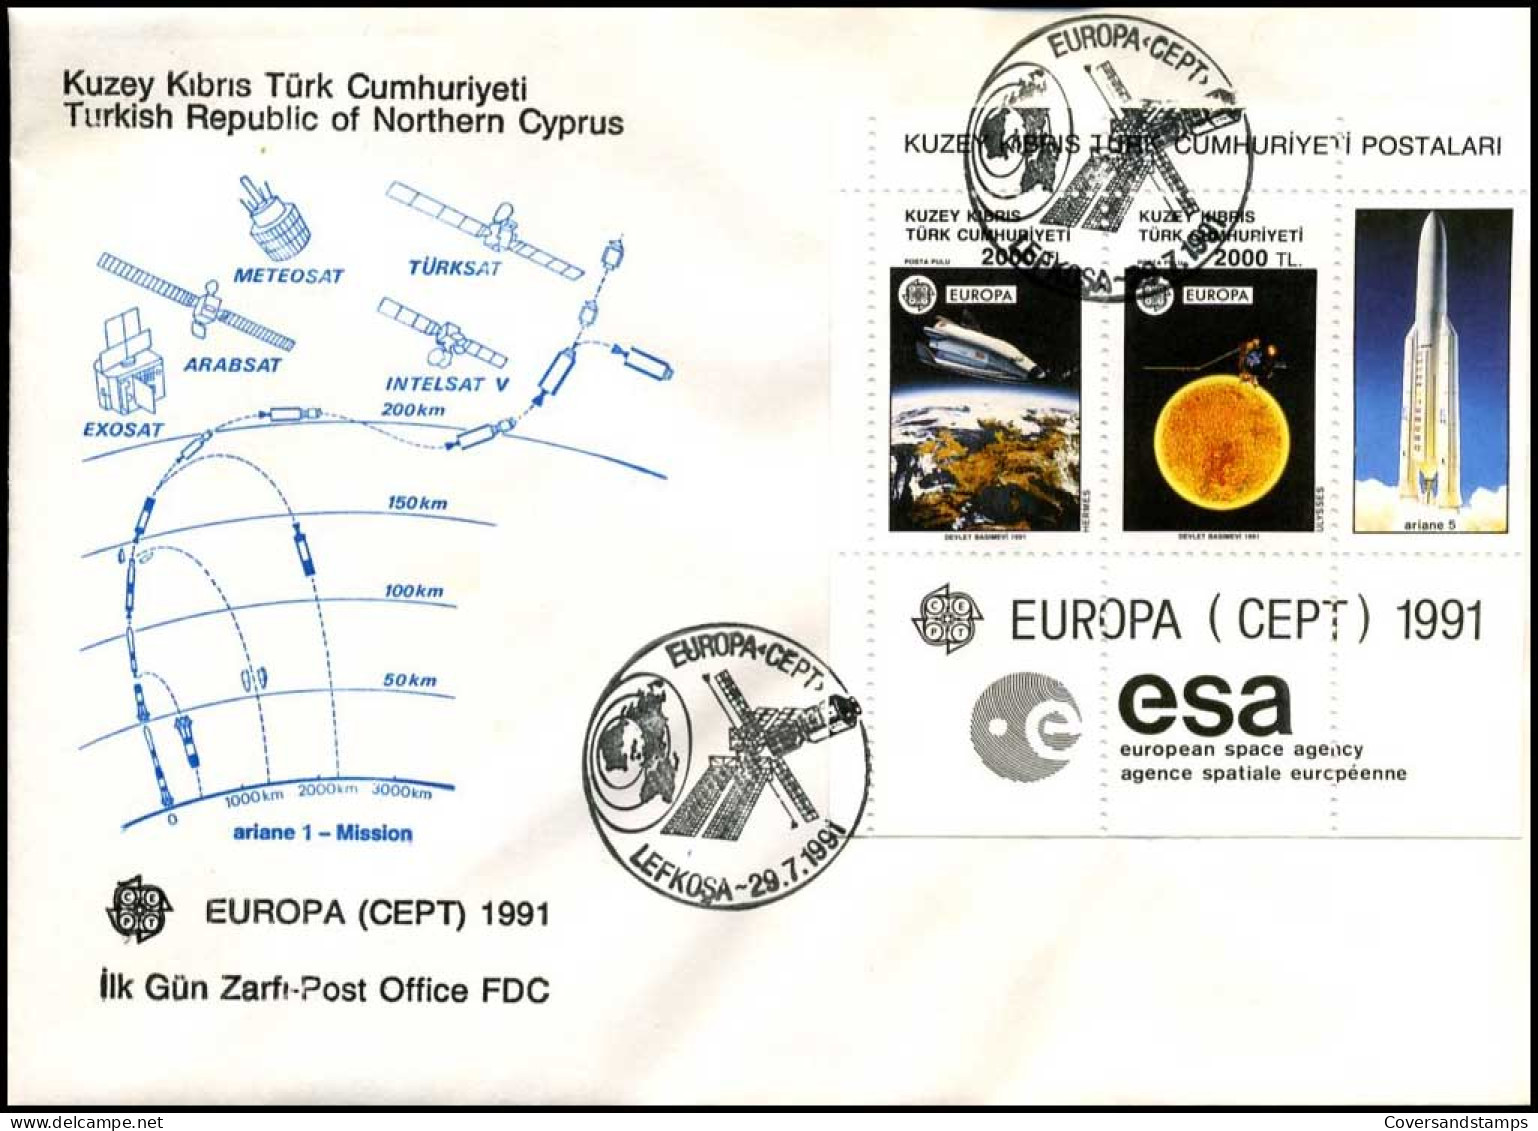  Turks Cyprus  - FDC - Europa CEPT 1991 - 1991